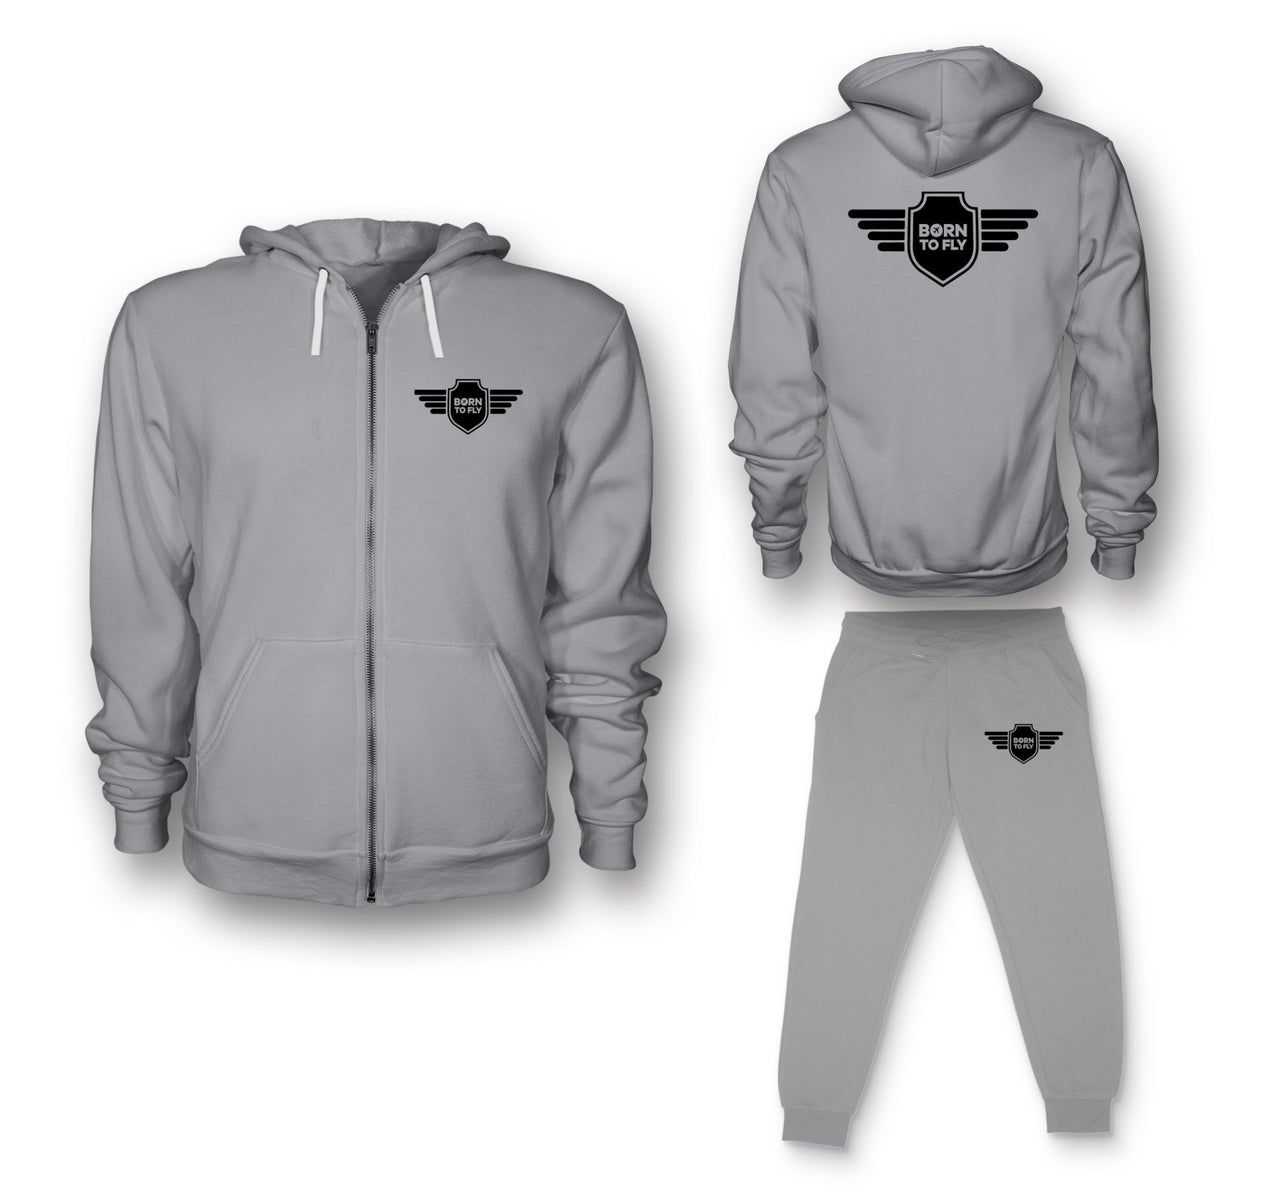 Born To Fly & Badge Designed Zipped Hoodies & Sweatpants Set